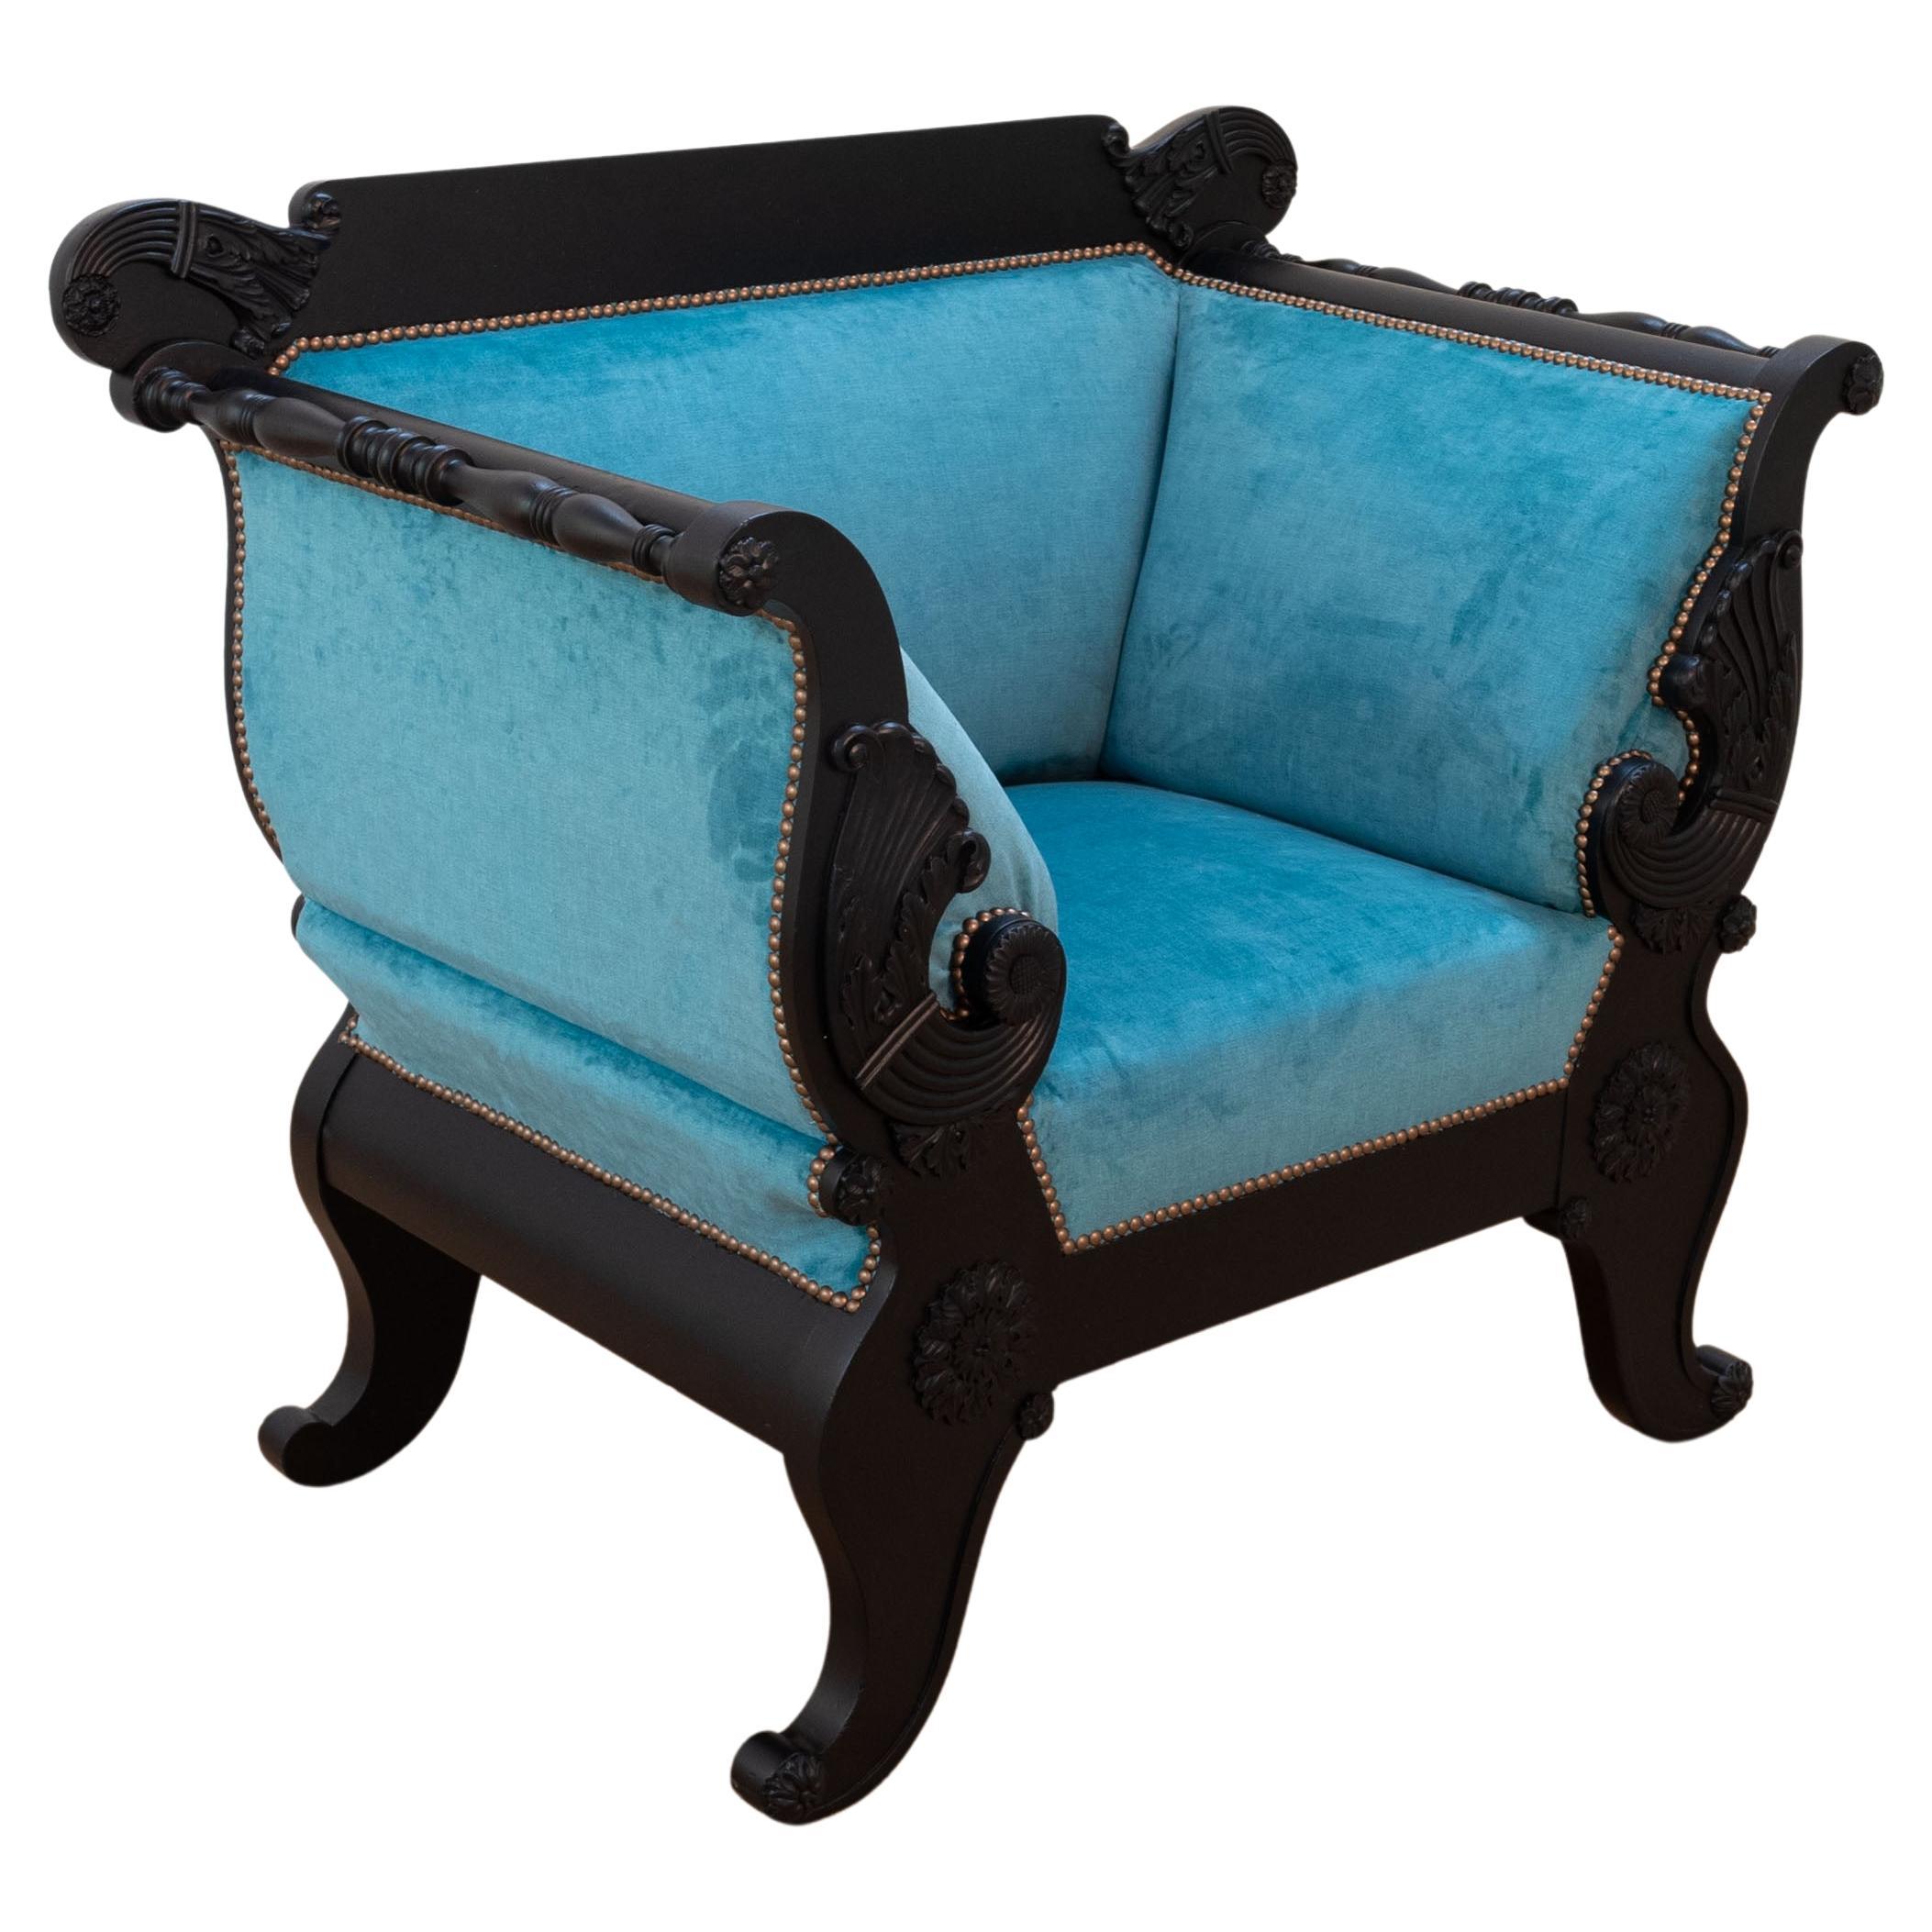 19th century black Biedermeier armchair with new blue velvet